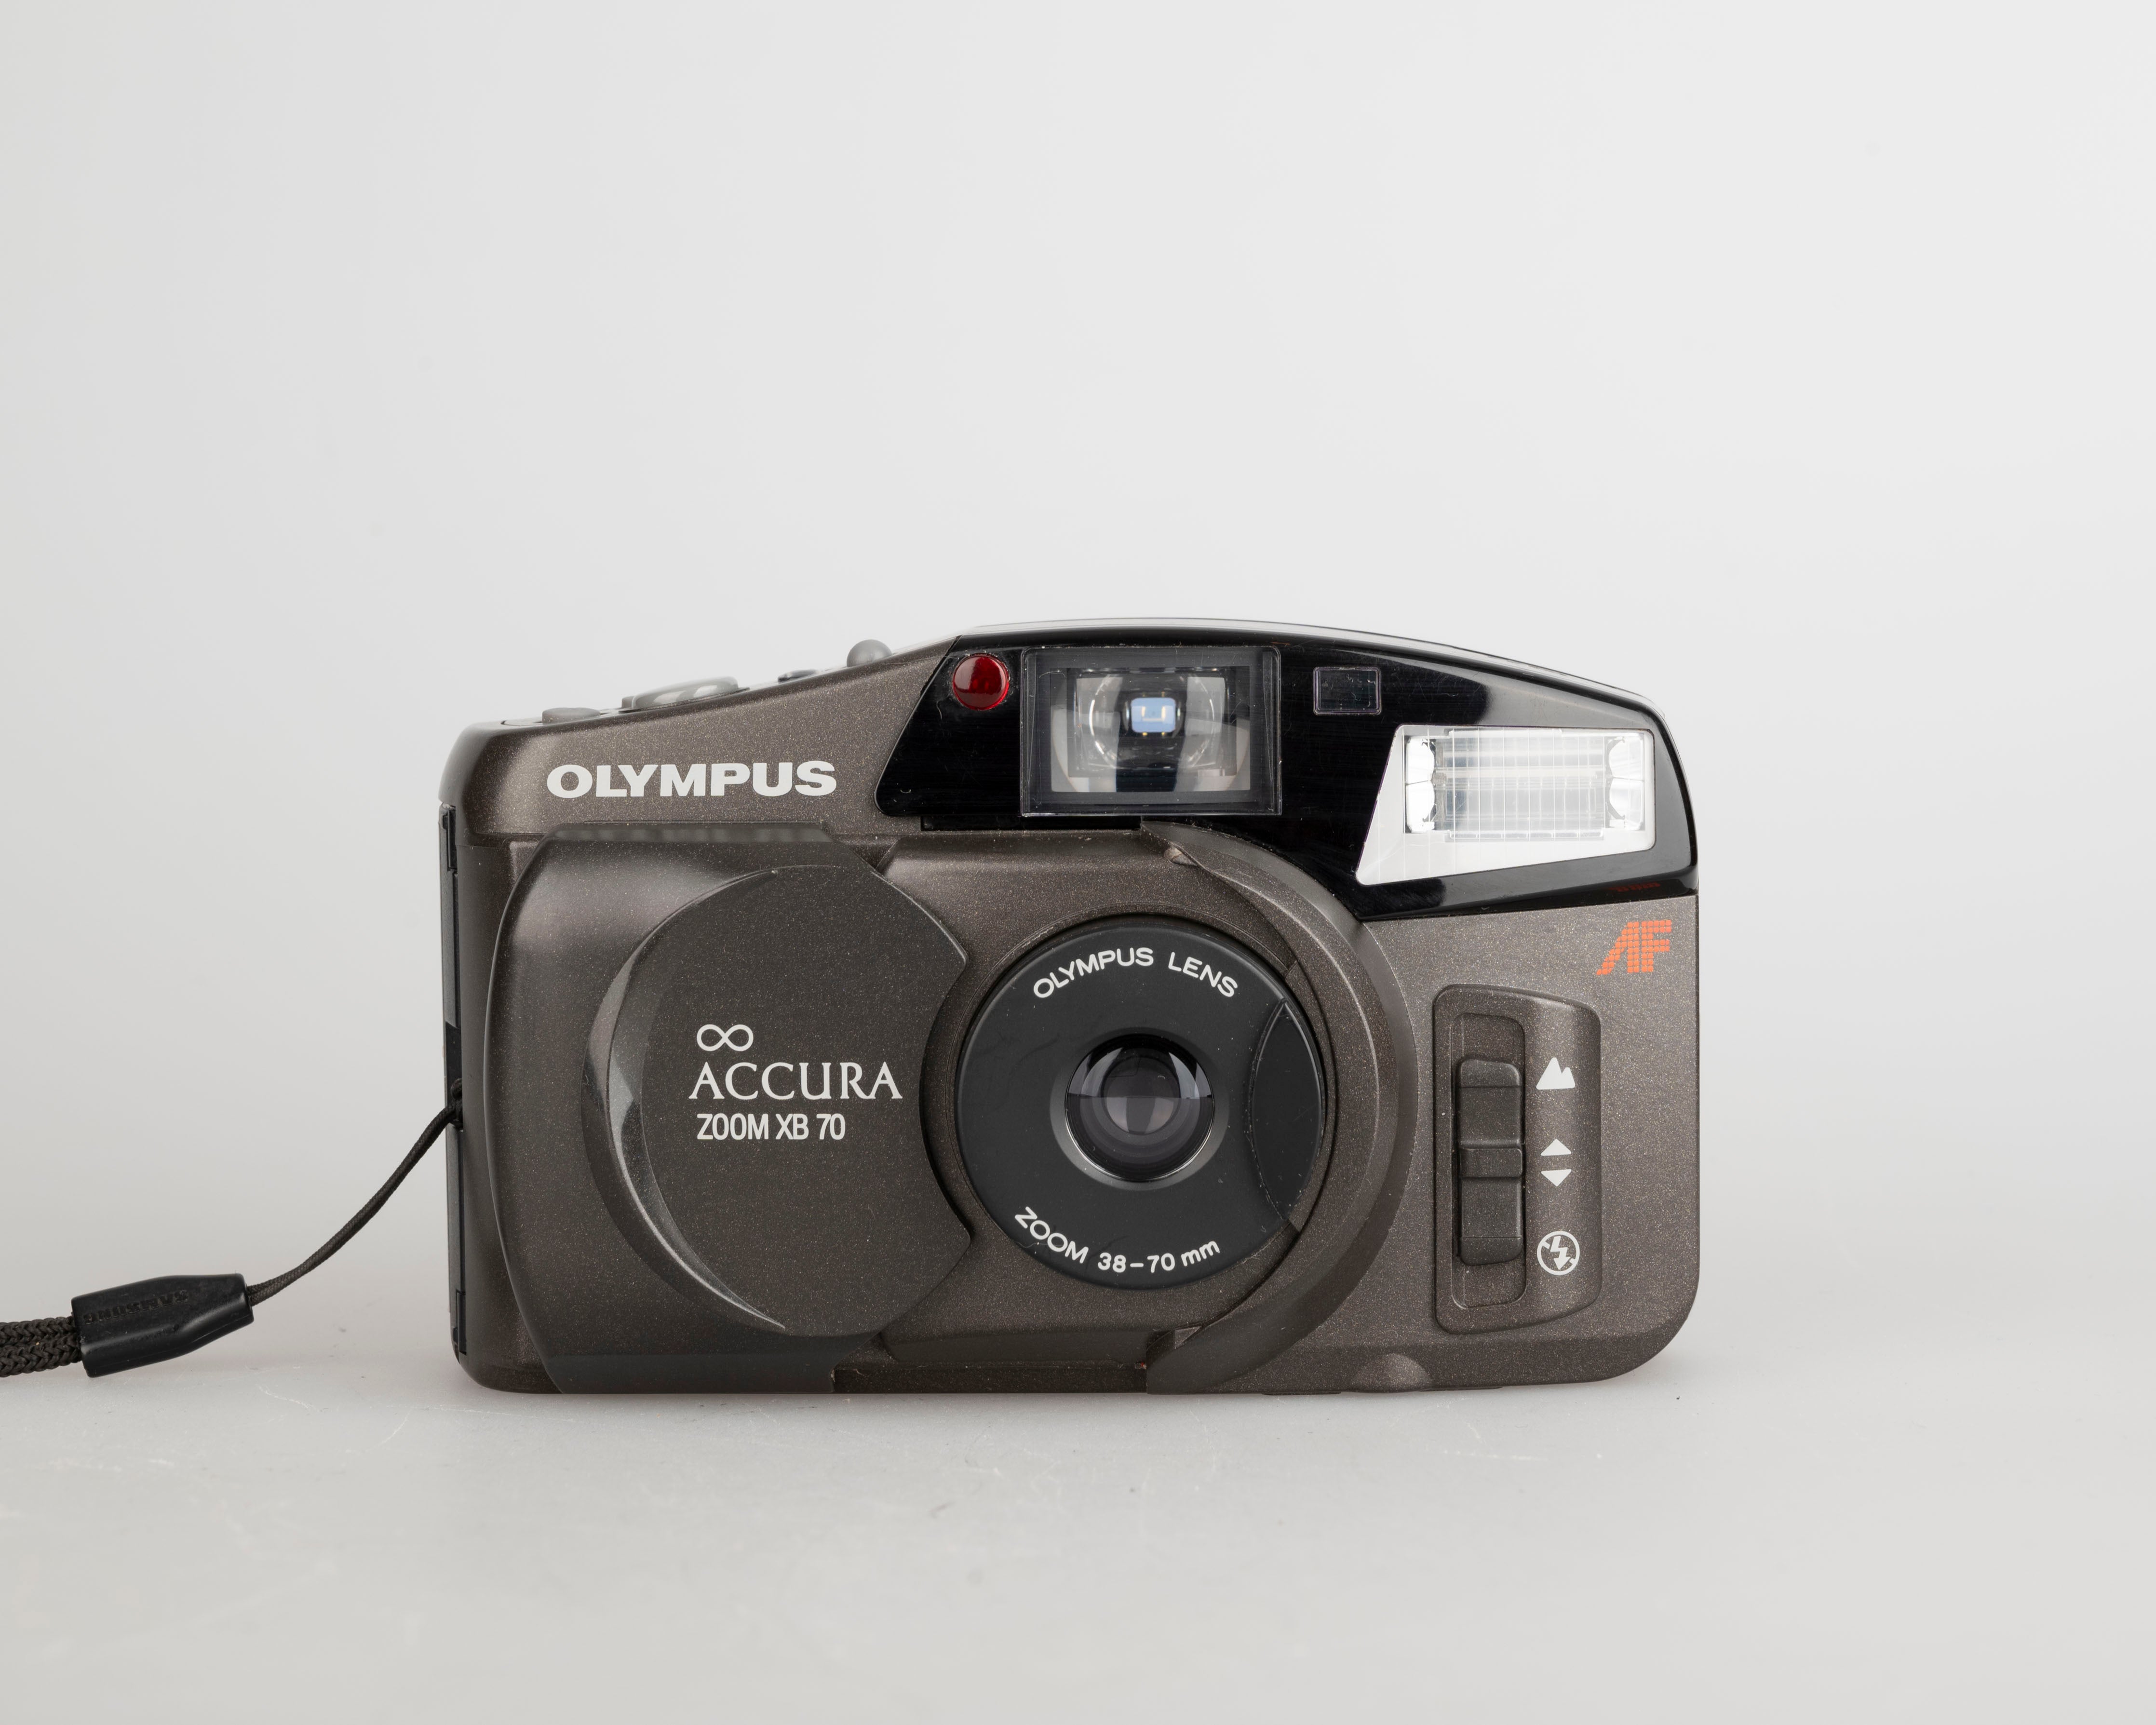 Olympus Infinity Accura Zoom XB70 35mm camera – New Wave Pool